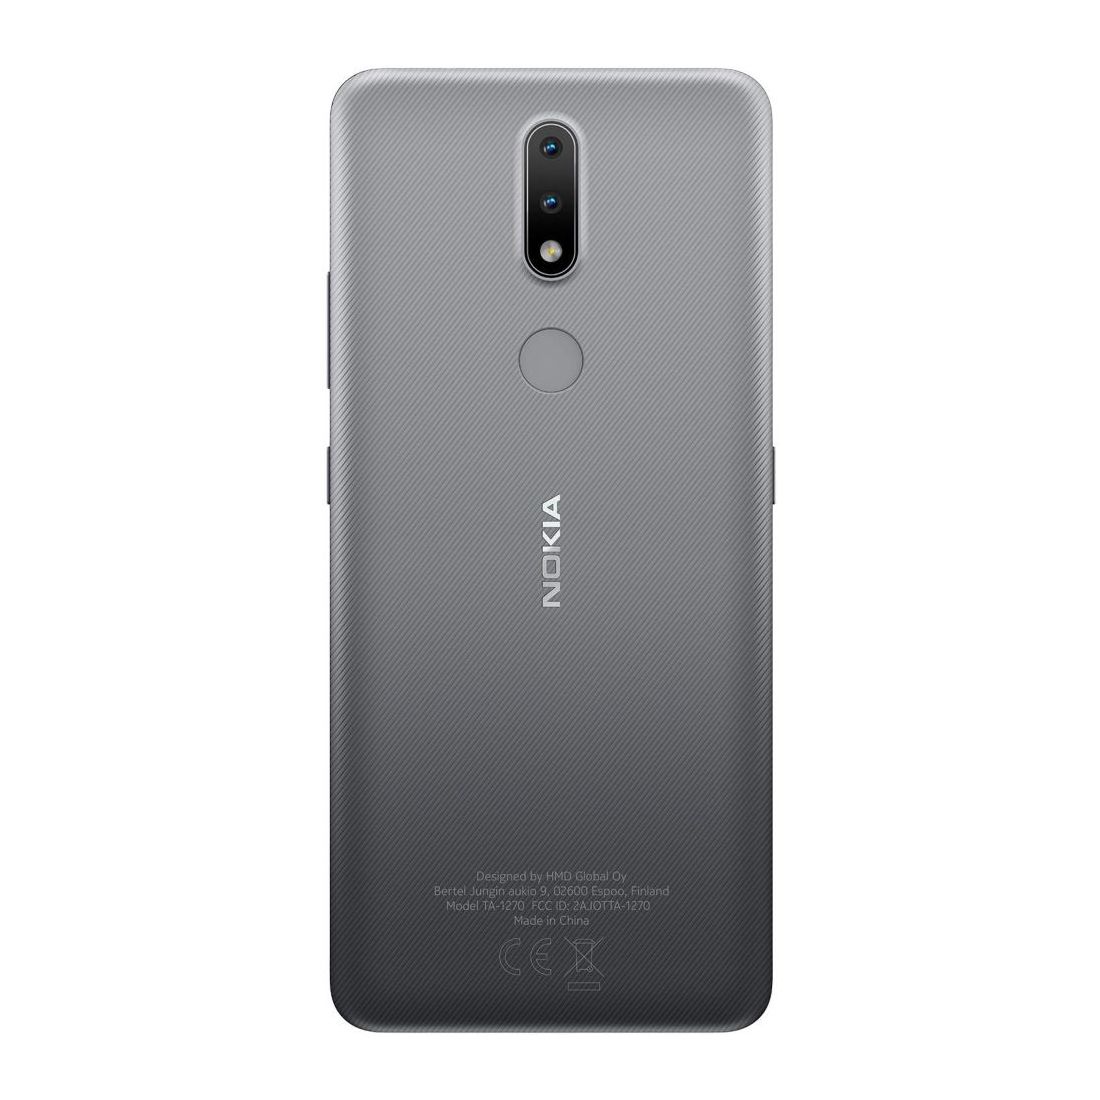 Nokia 2.4 TA-1270 Smartphone 32GB/2GB Dual Sim Grey